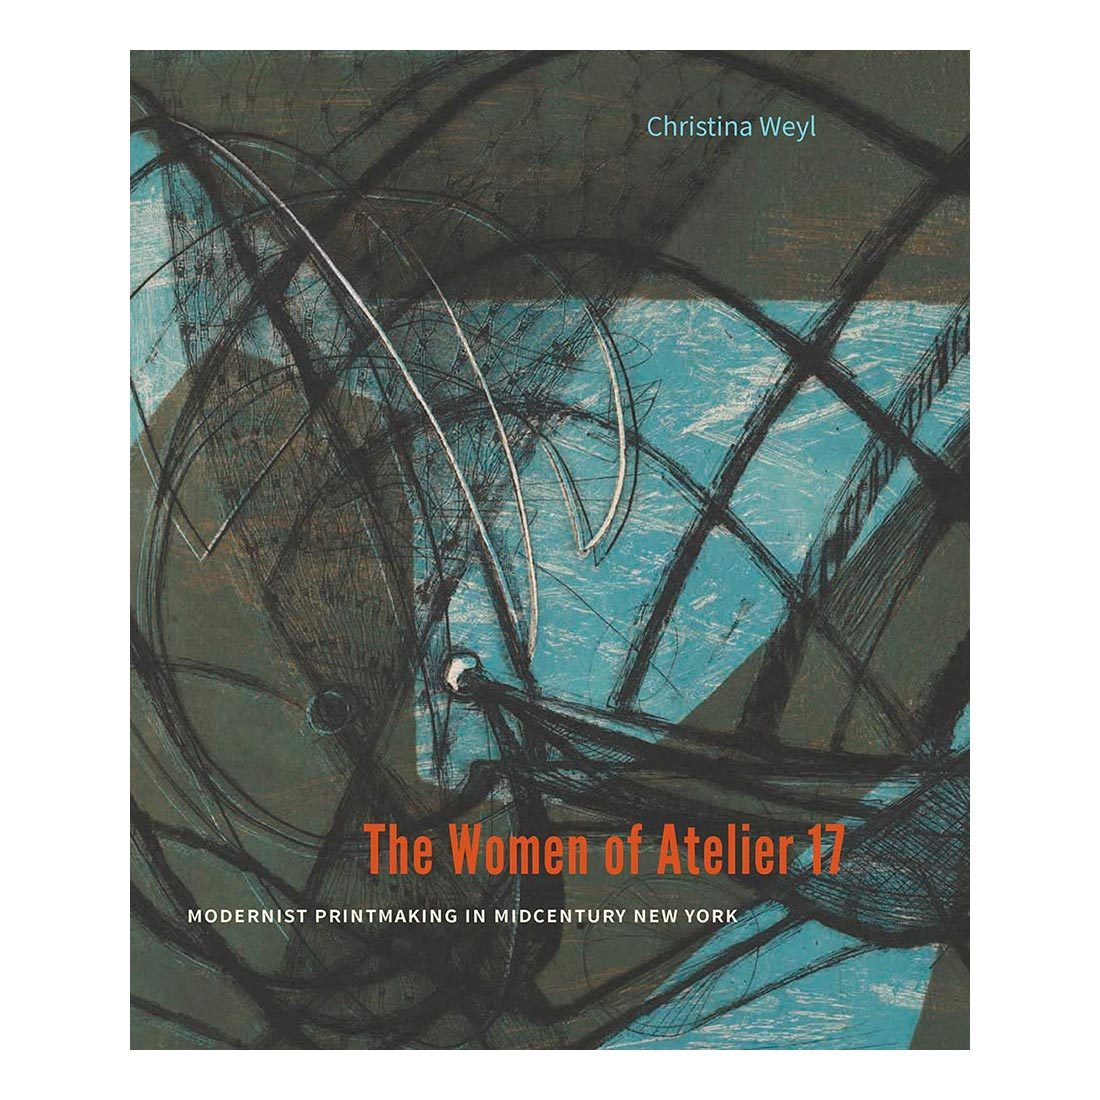 The Women of Atelier 17: Modernist Printmaking in Midcentury New York